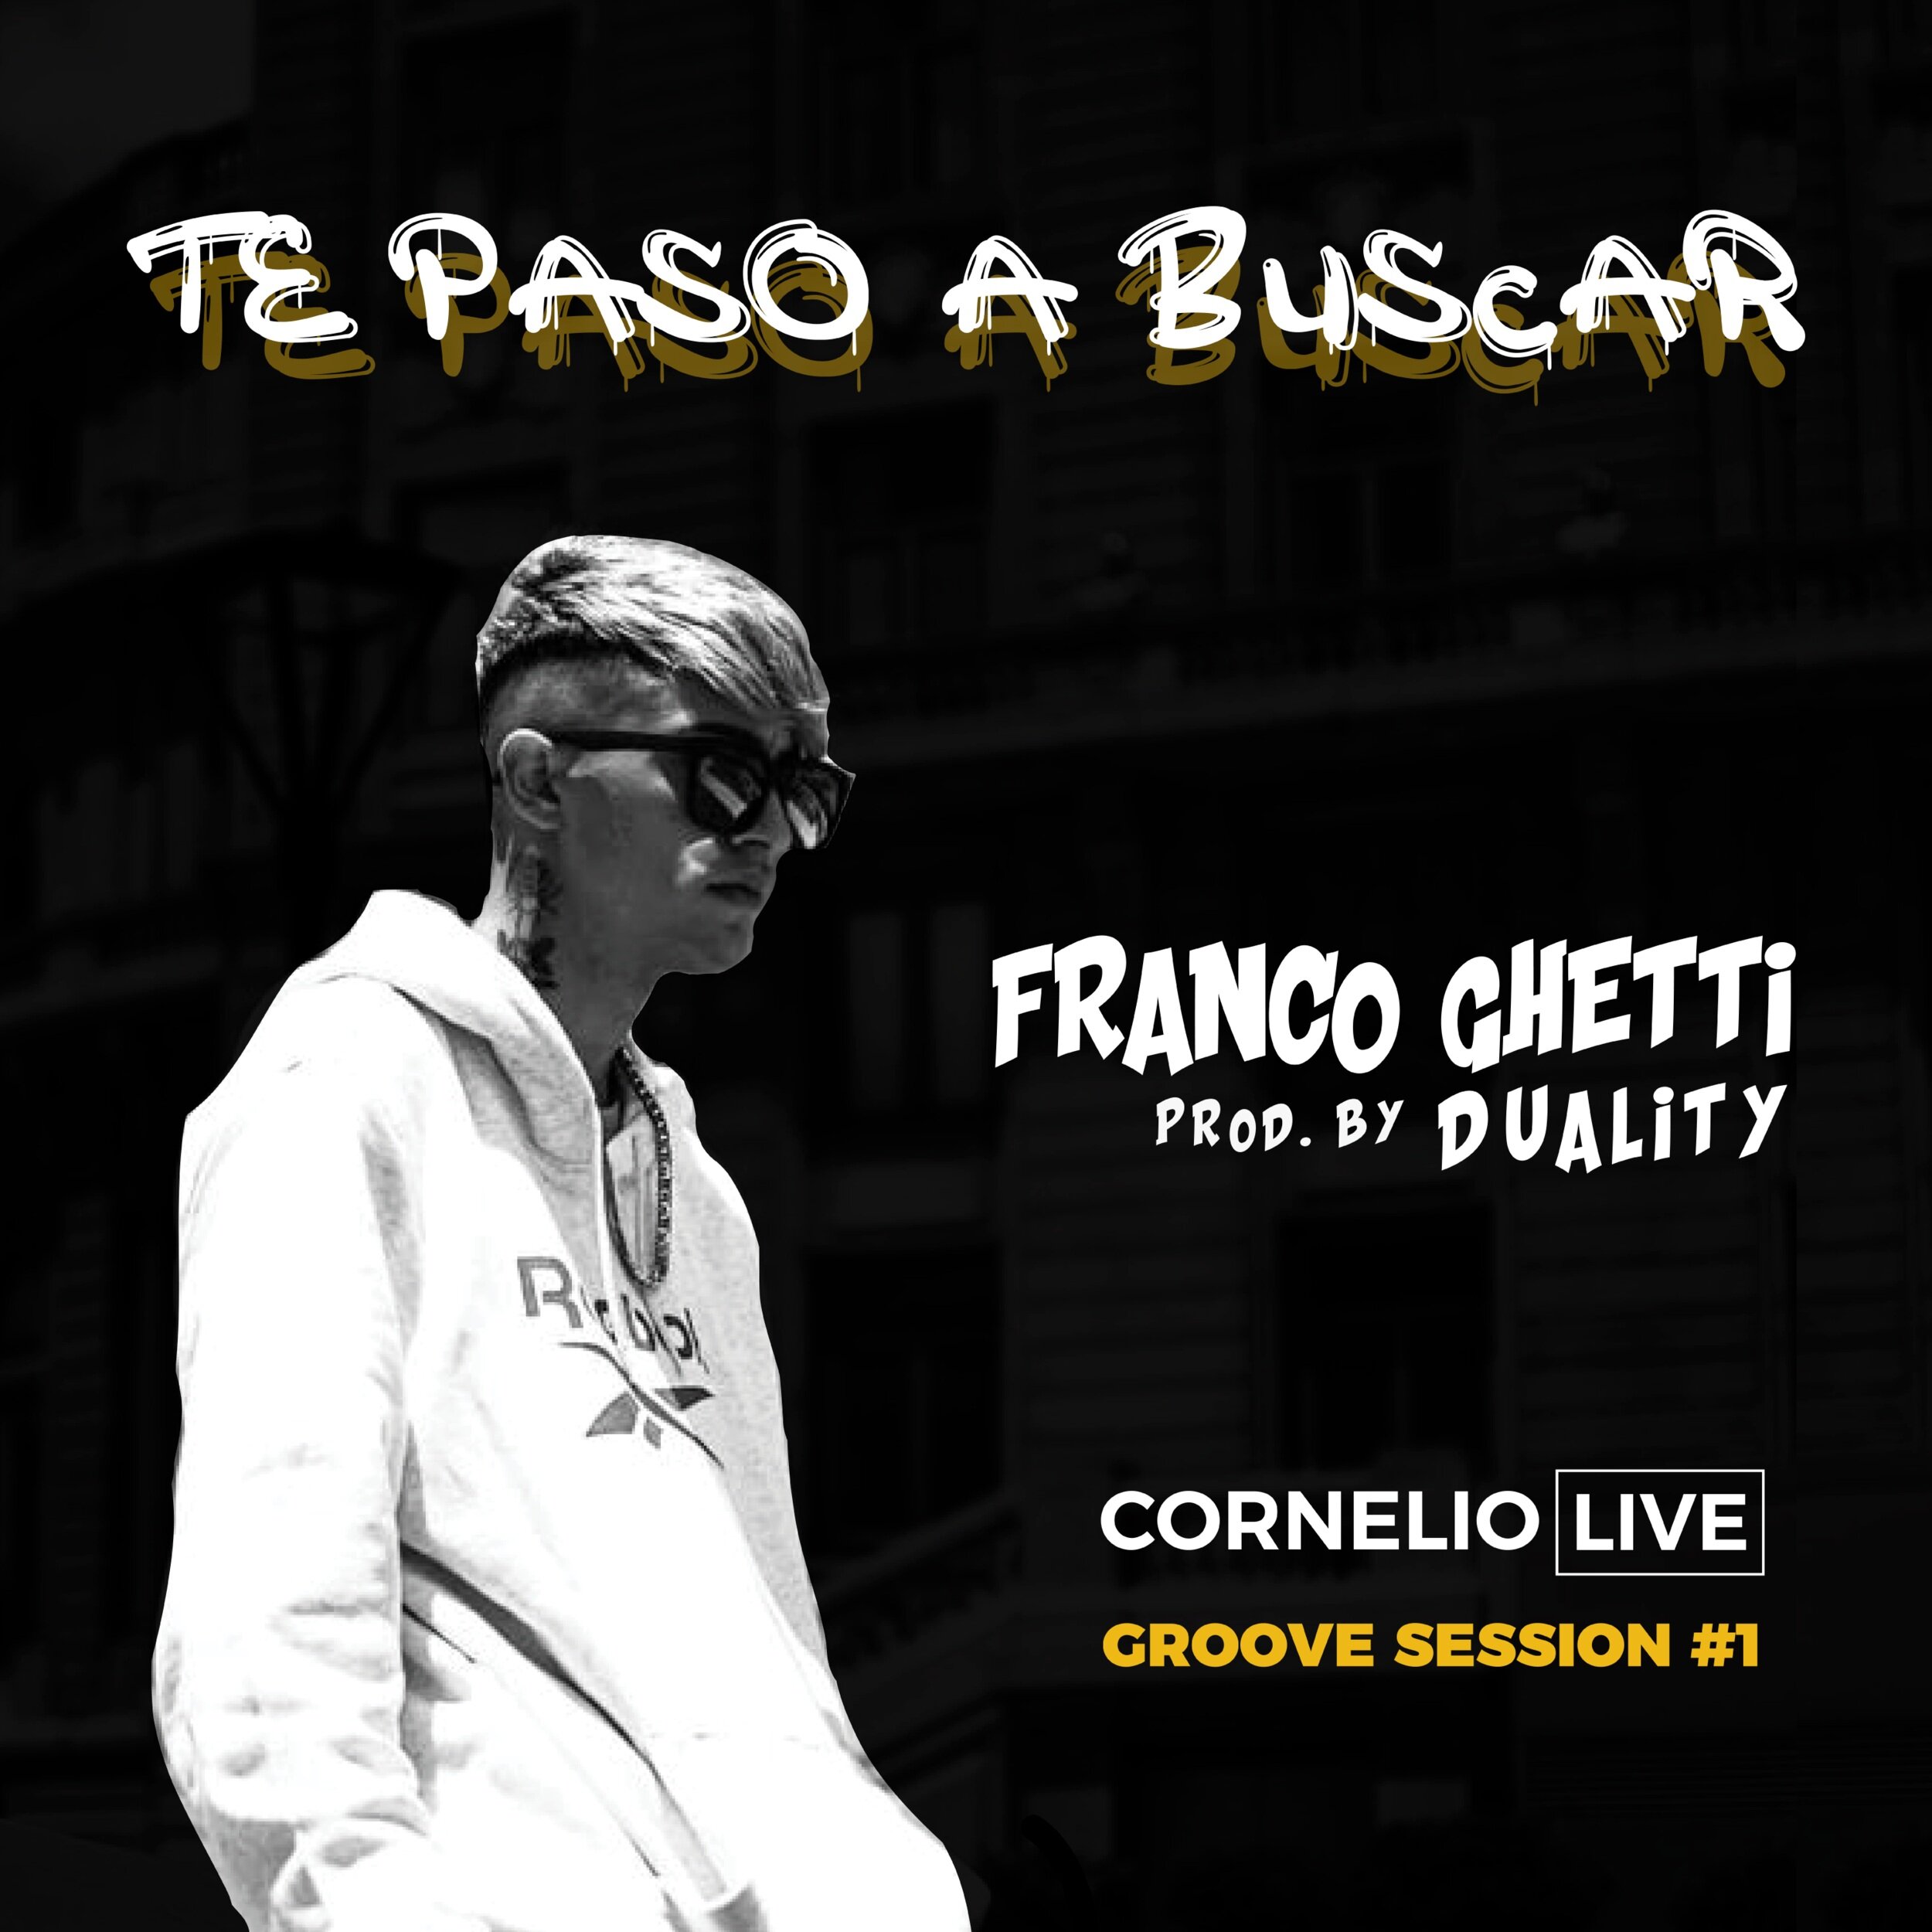 Franco Ghetti Prod/Mix/Master by Duality